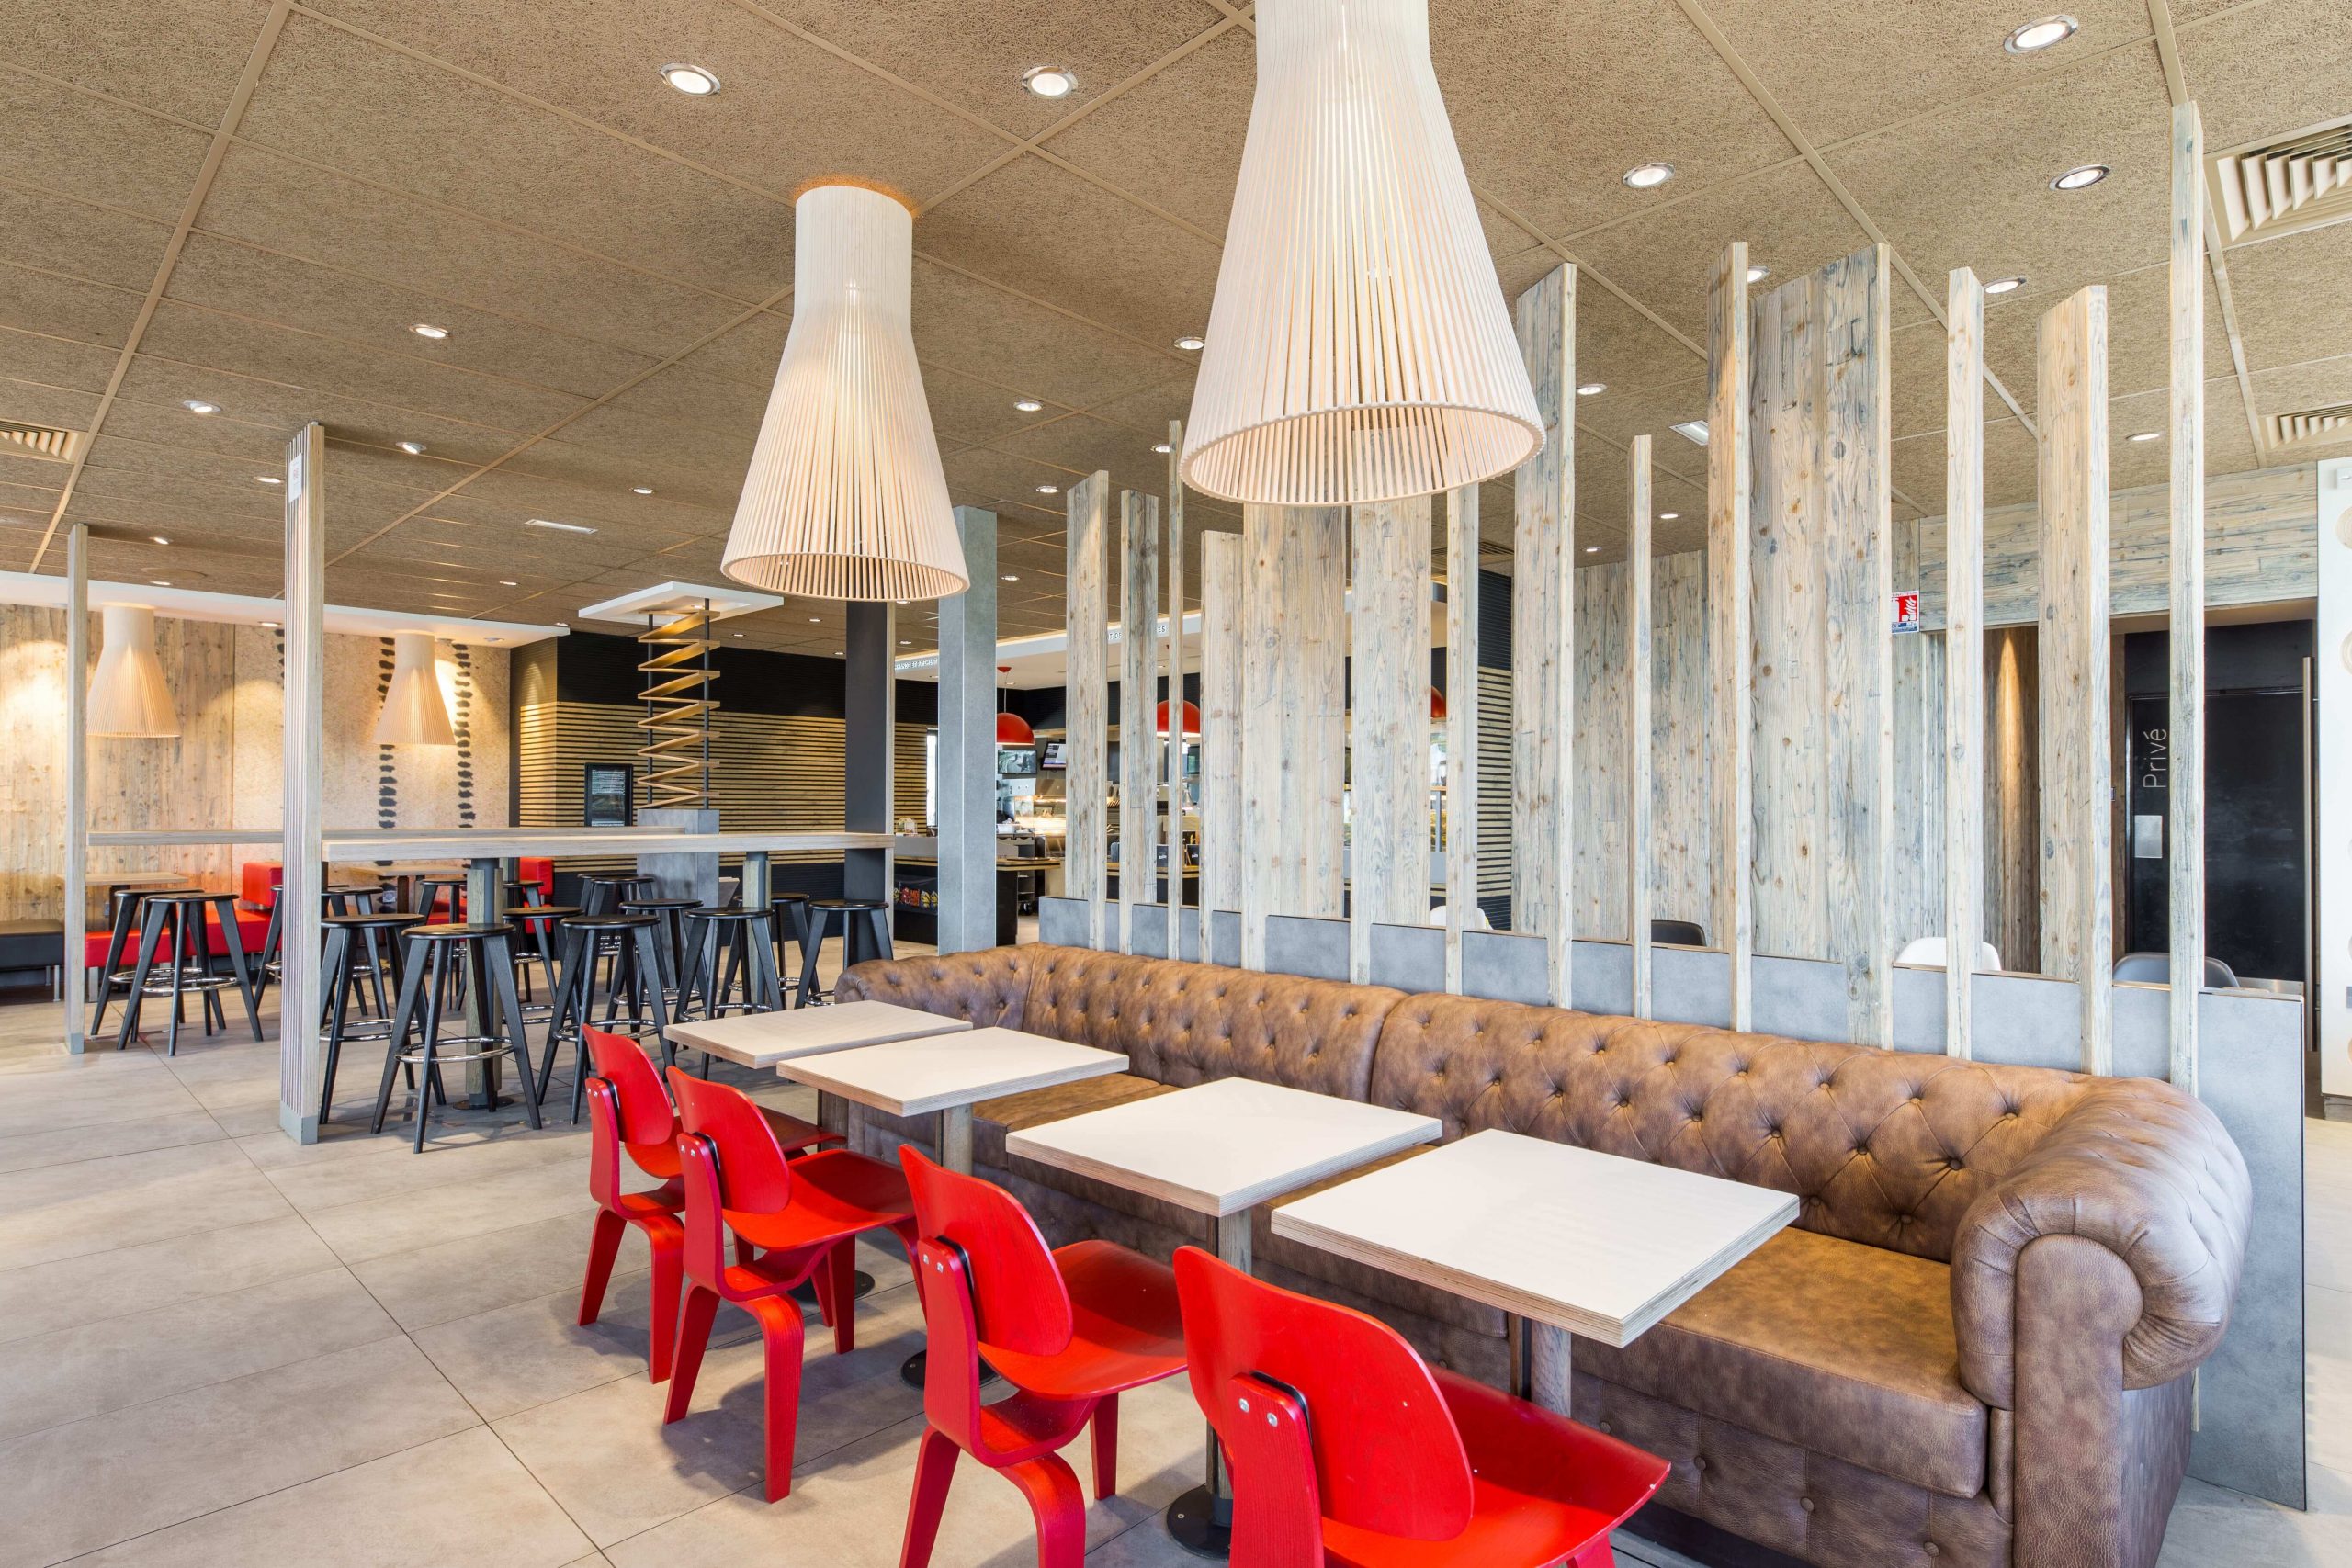 Verres Coca-Cola® 2022 - McDonald's Strasbourg - Eurométropole & Erstein